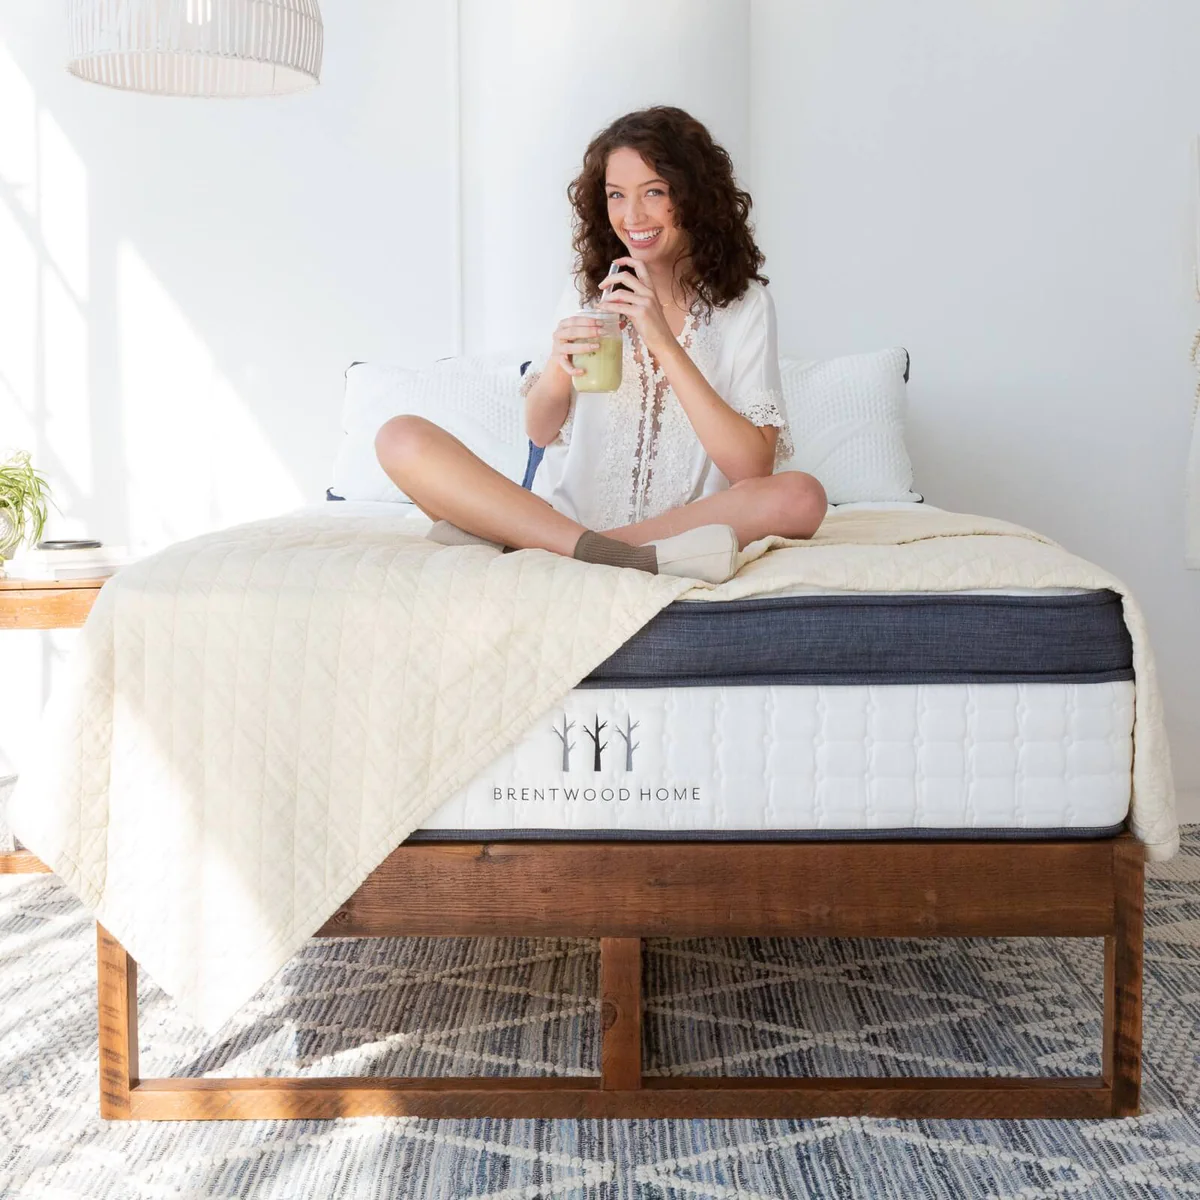 Eco-friendly mattress brands for green living